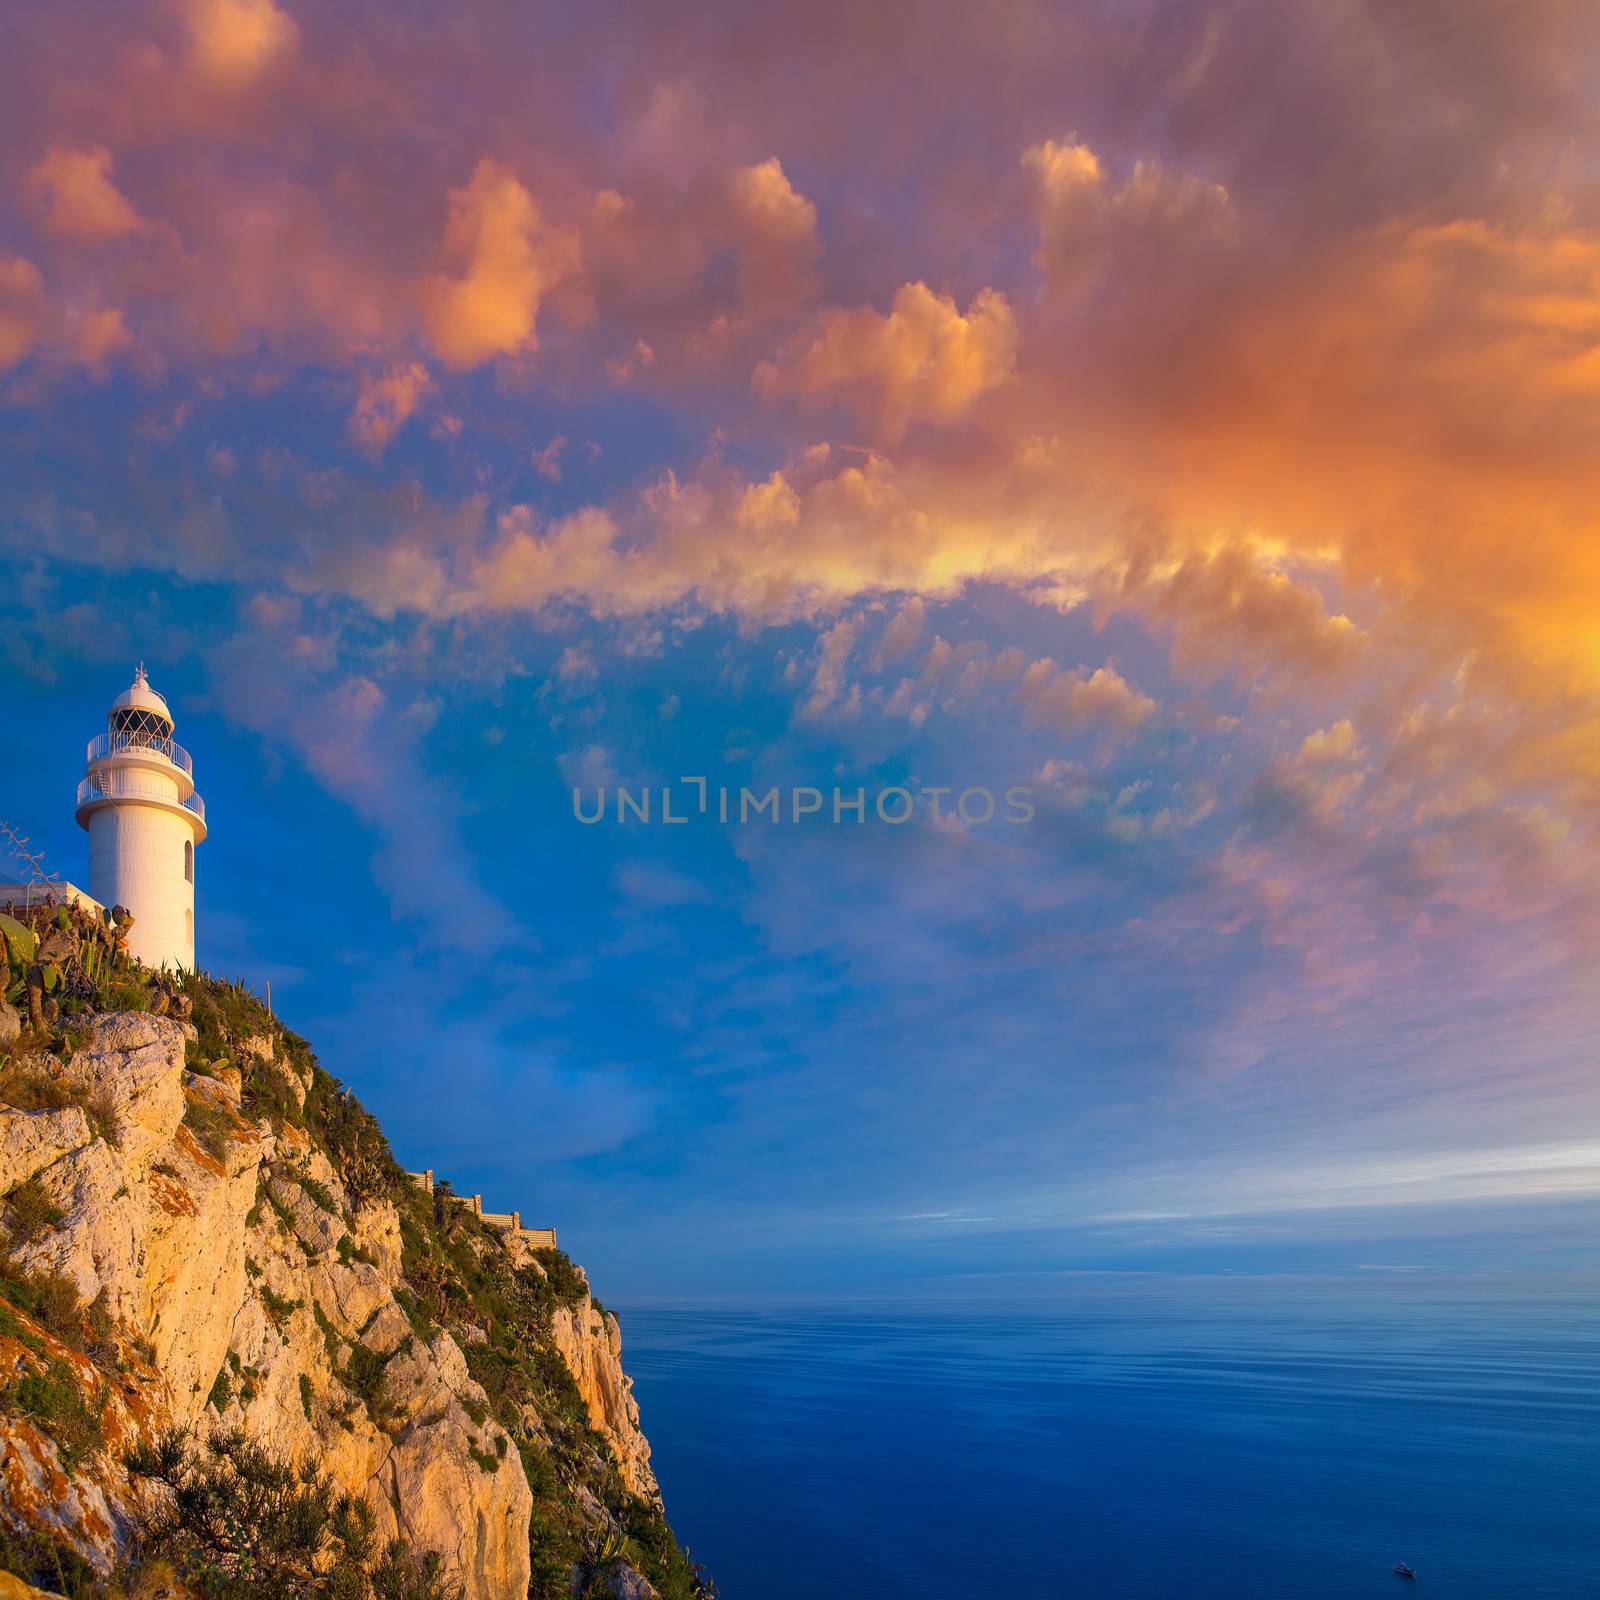 Denia Javea San Antonio Cape Mediterranean Lighthouse in Alicante Province Spain